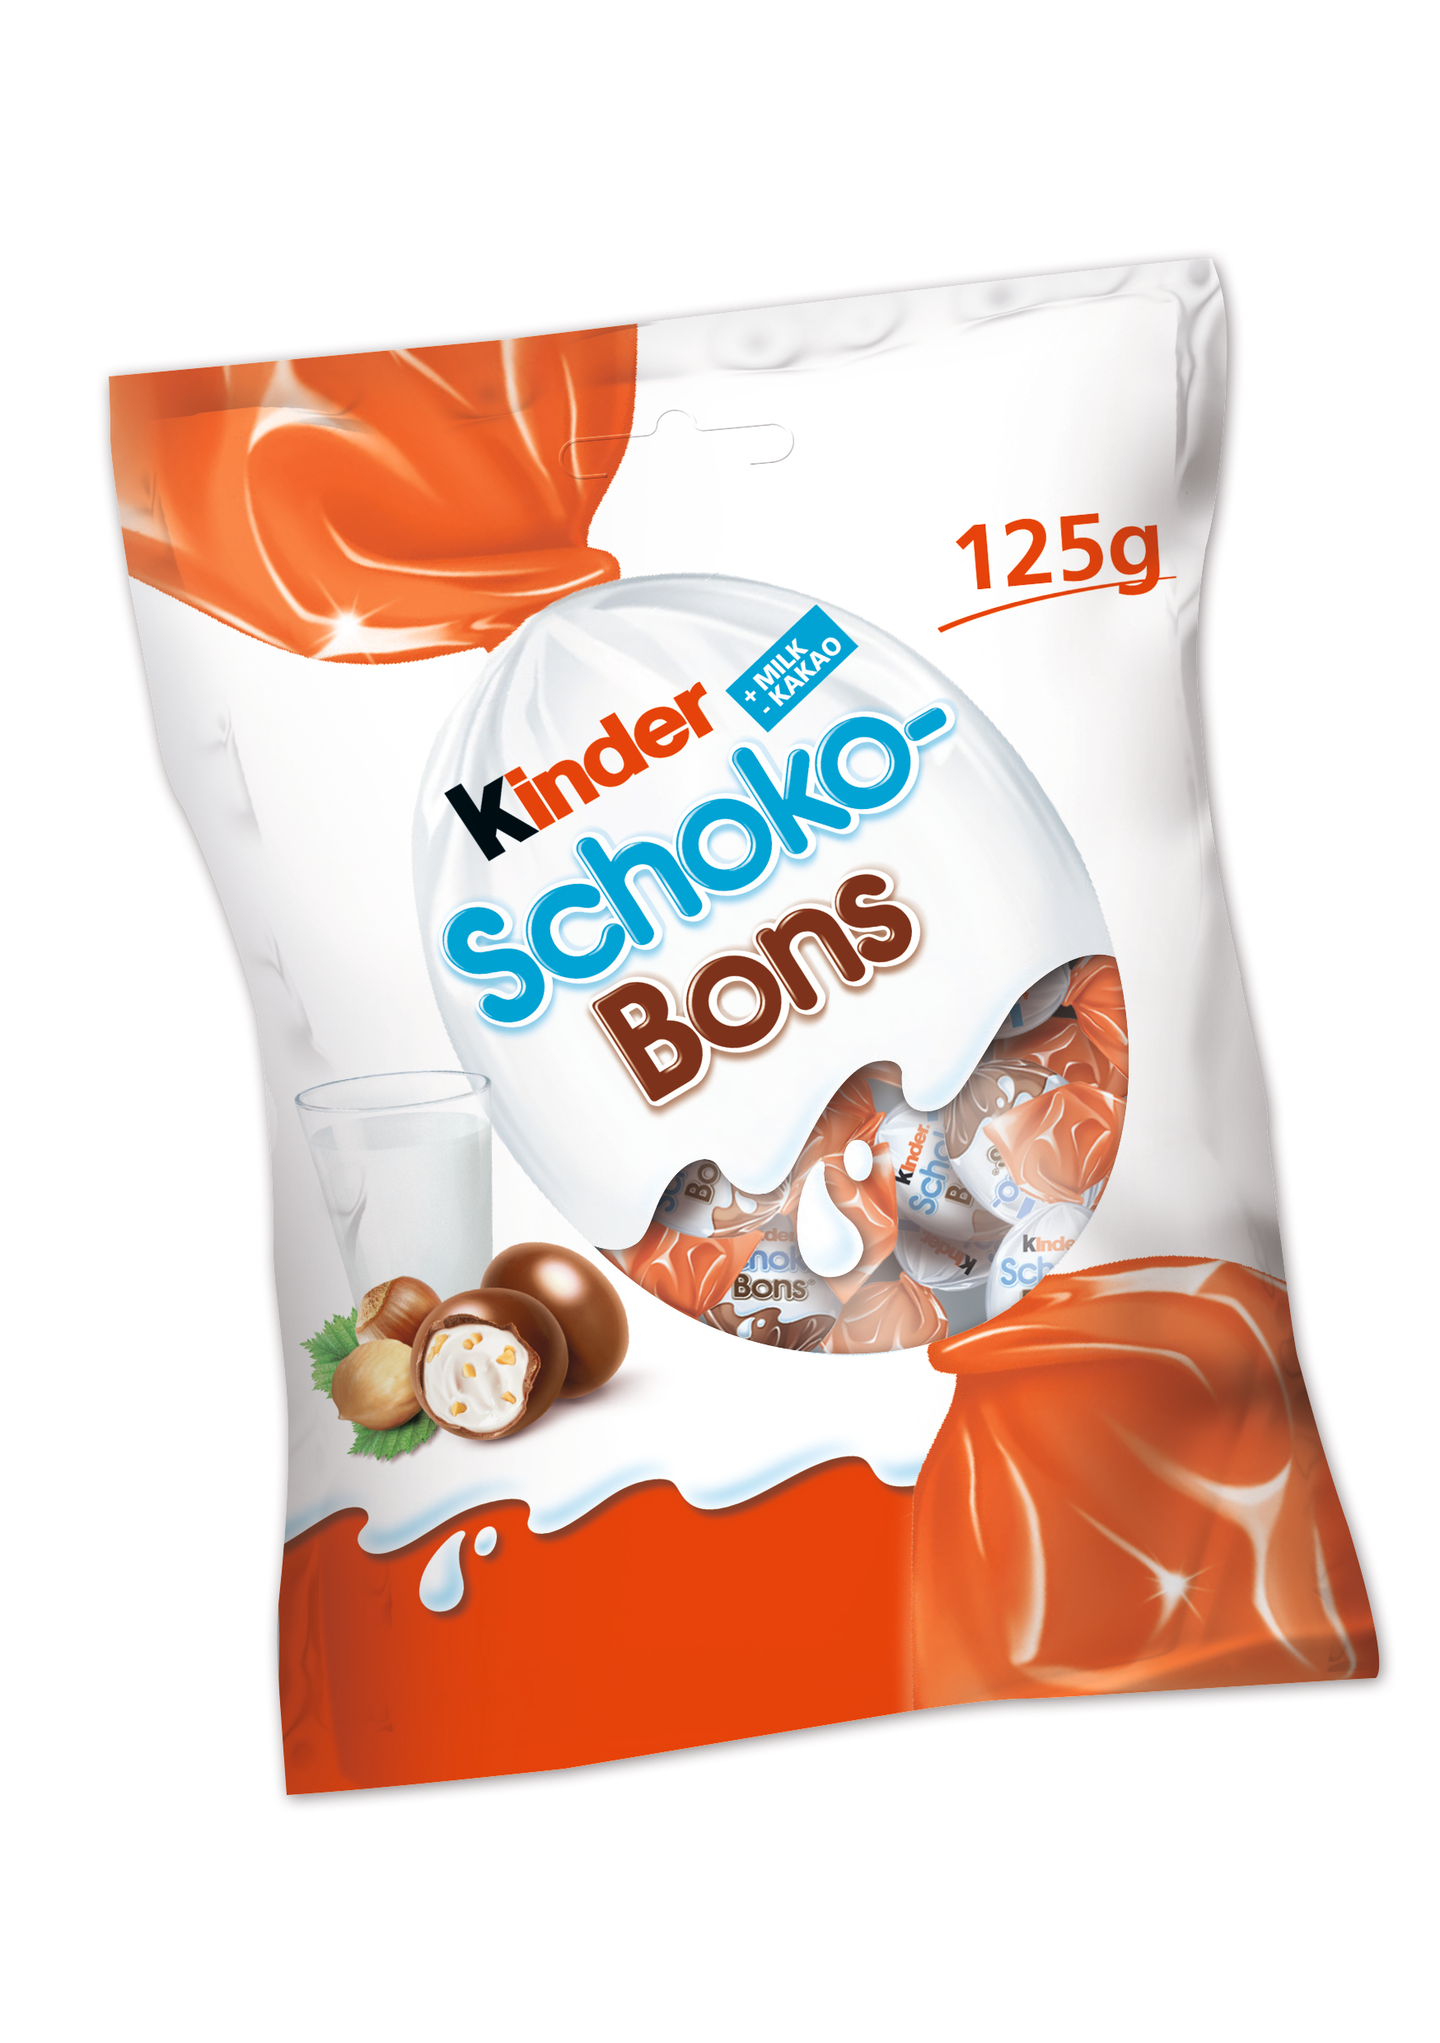  Kinder 125g Schoko-Bons choklad